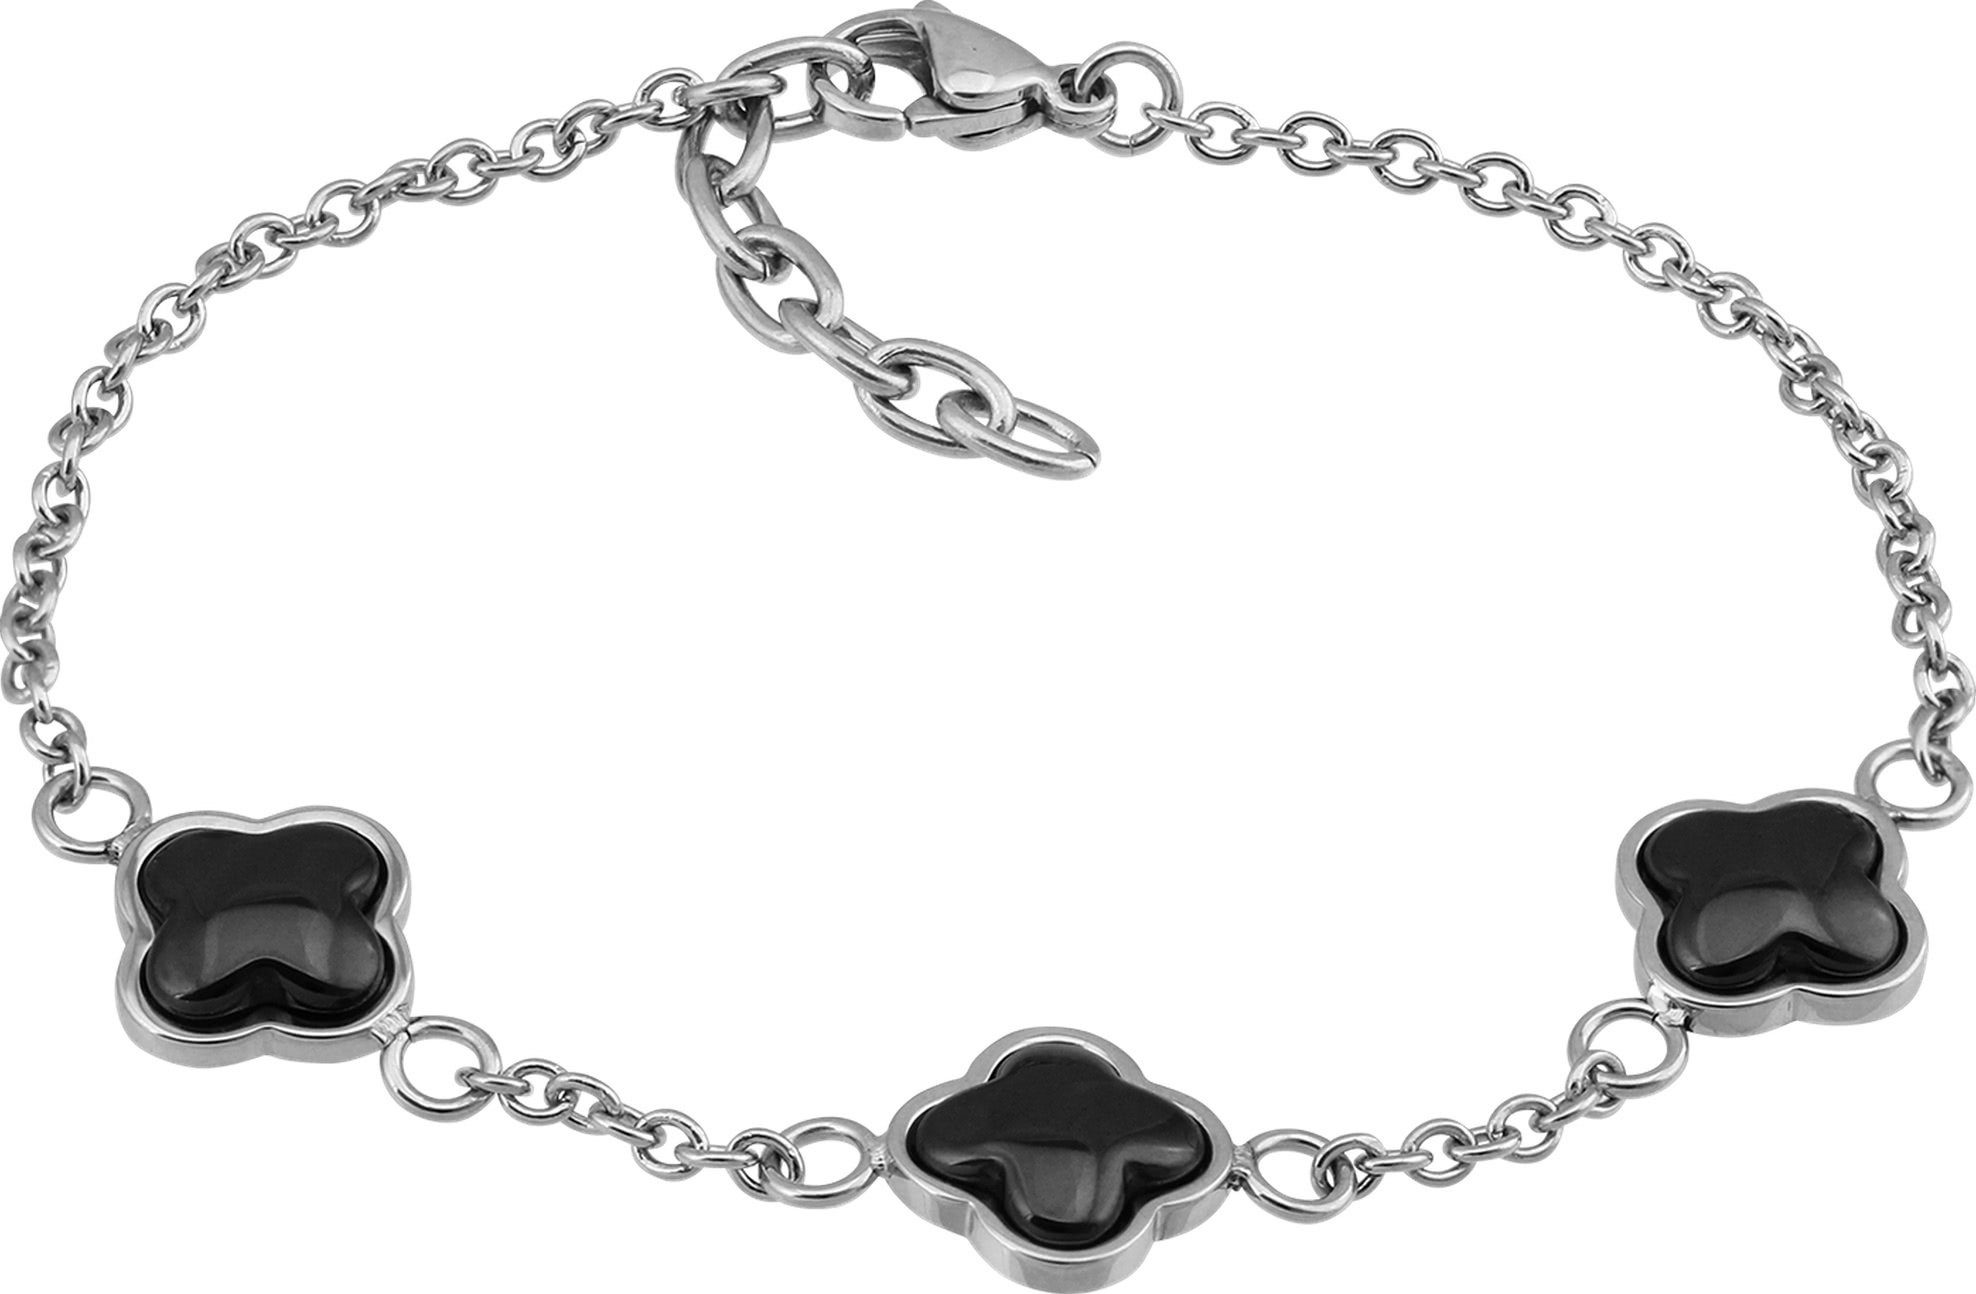 Edelstahl Steel) Armband schwarz für Armbänder Damen Amello Amello (Armband), Kleeblatt silber (Stainless Edelstahlarmband